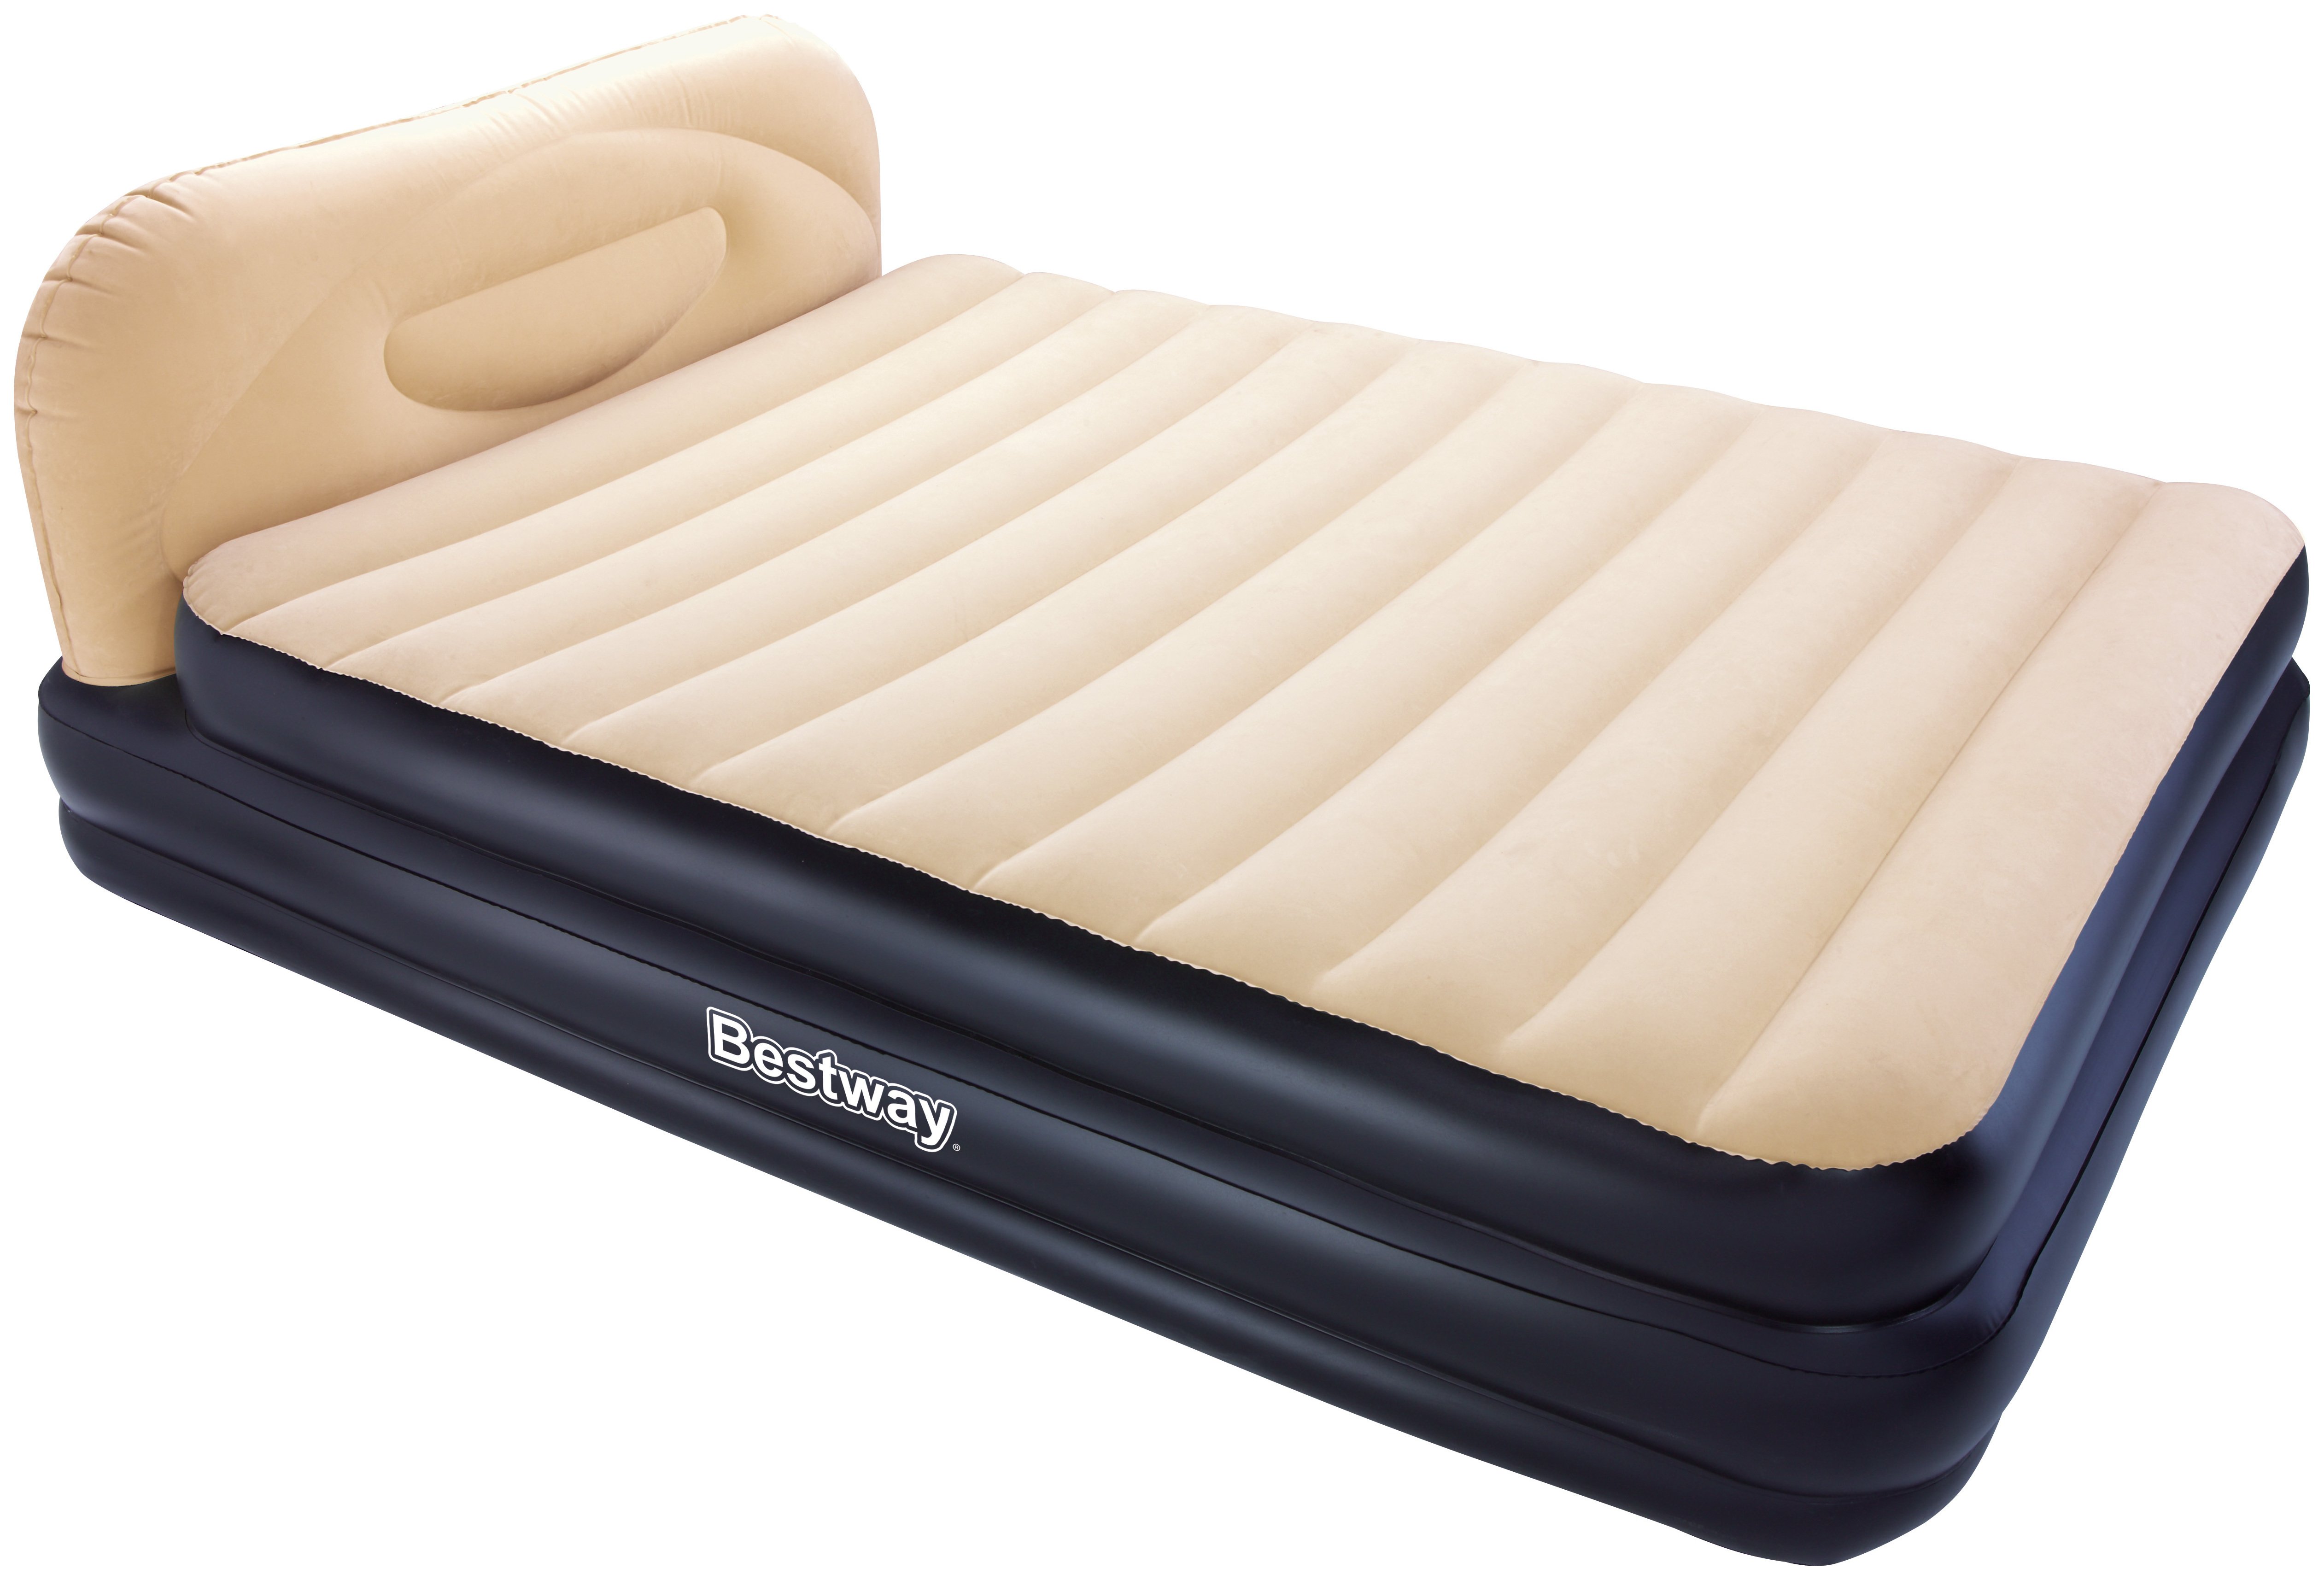 price of bestway inflatable sofa bed